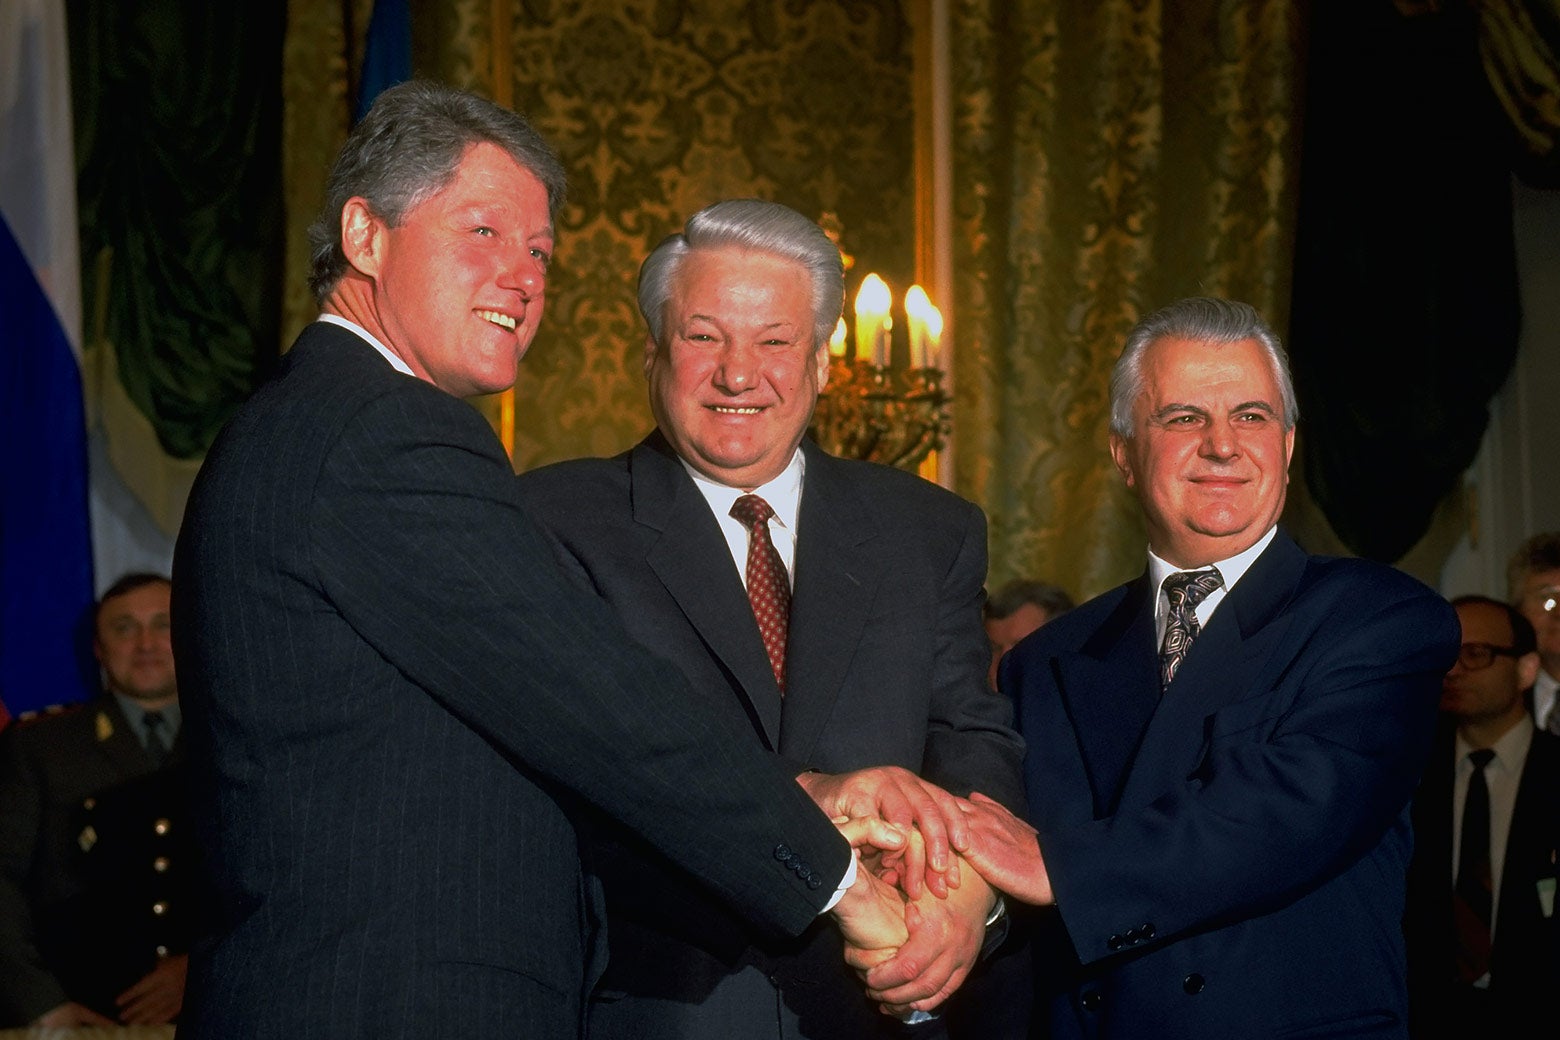 Three men in suits shaking hands.